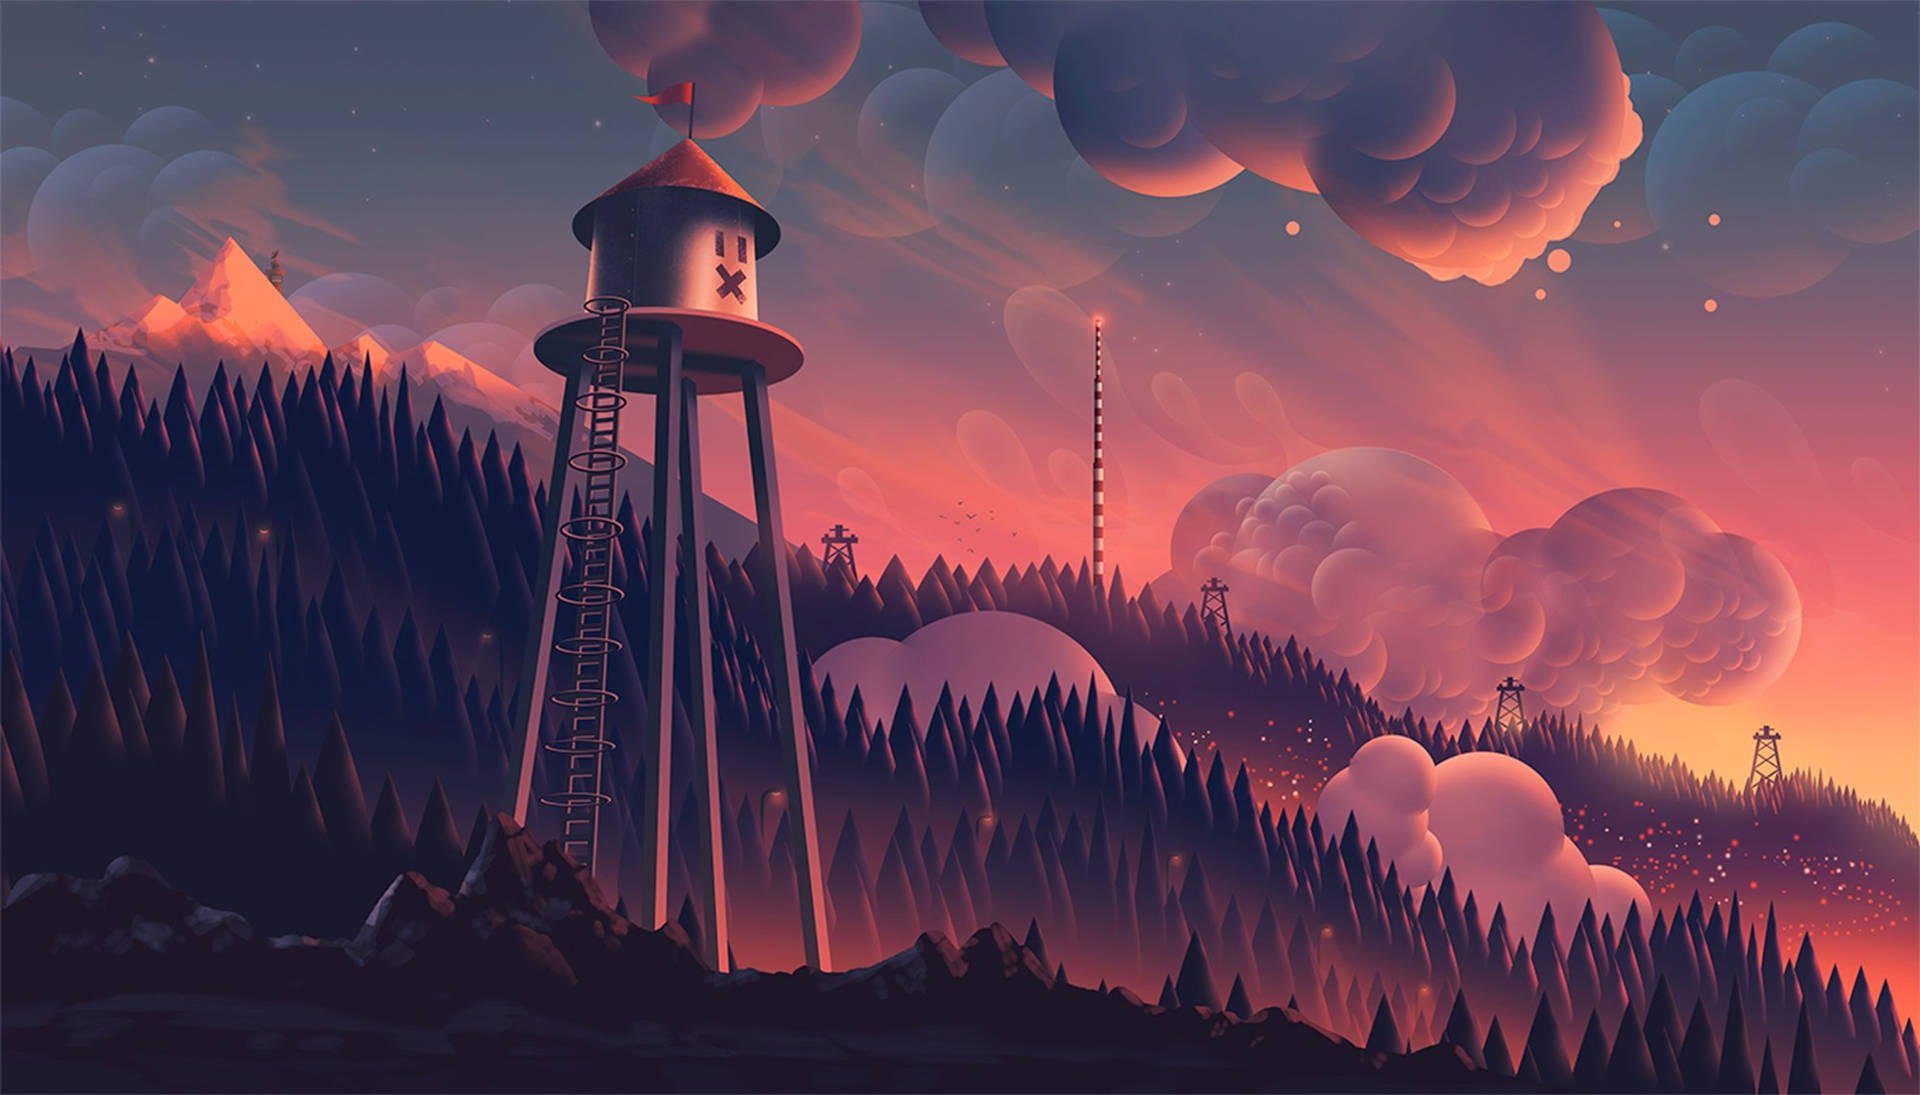 Tower In Forest Digital Art Wallpaper